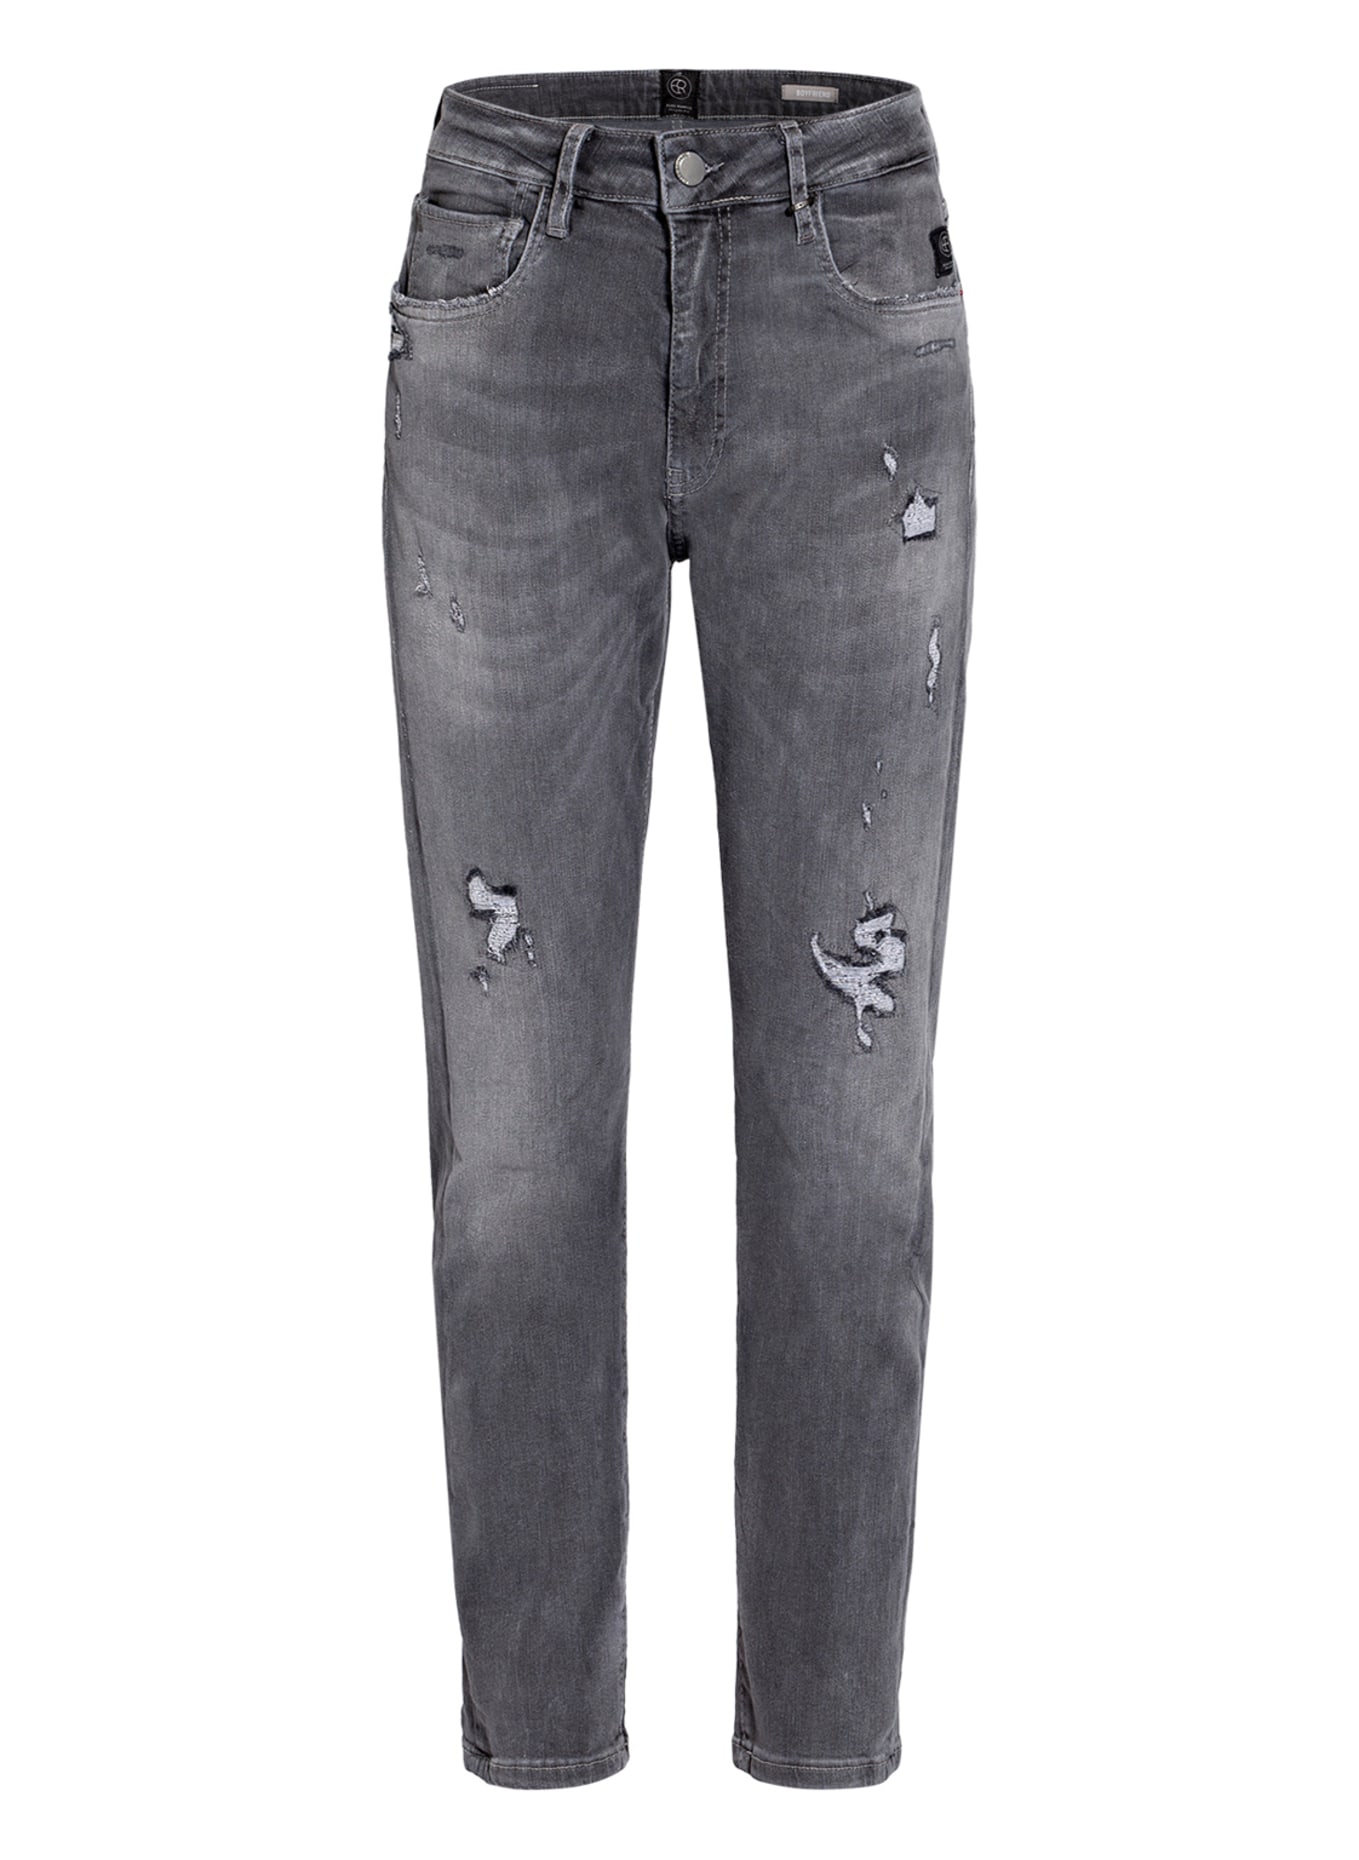 ELIAS RUMELIS 7/8-Jeans ERLEONA, Farbe: 612 darkness grey (Bild 1)